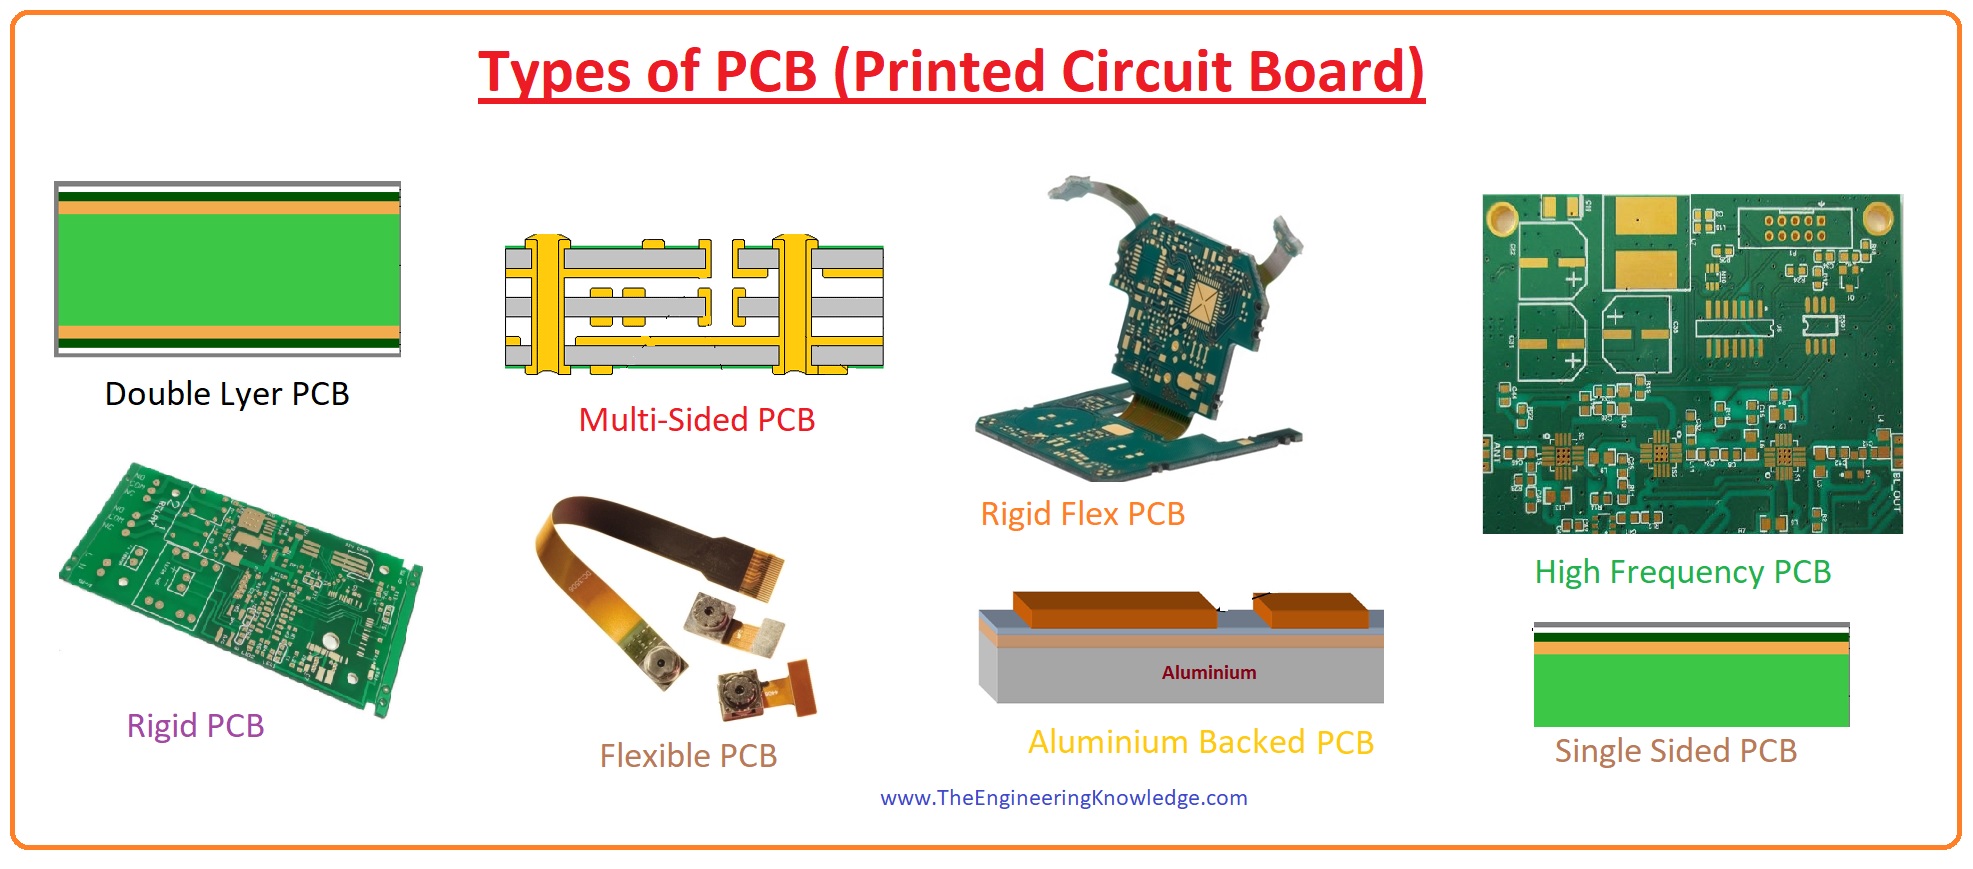 Types-of-PCB-Printed-Circuit-Board.jpg (1973×869)